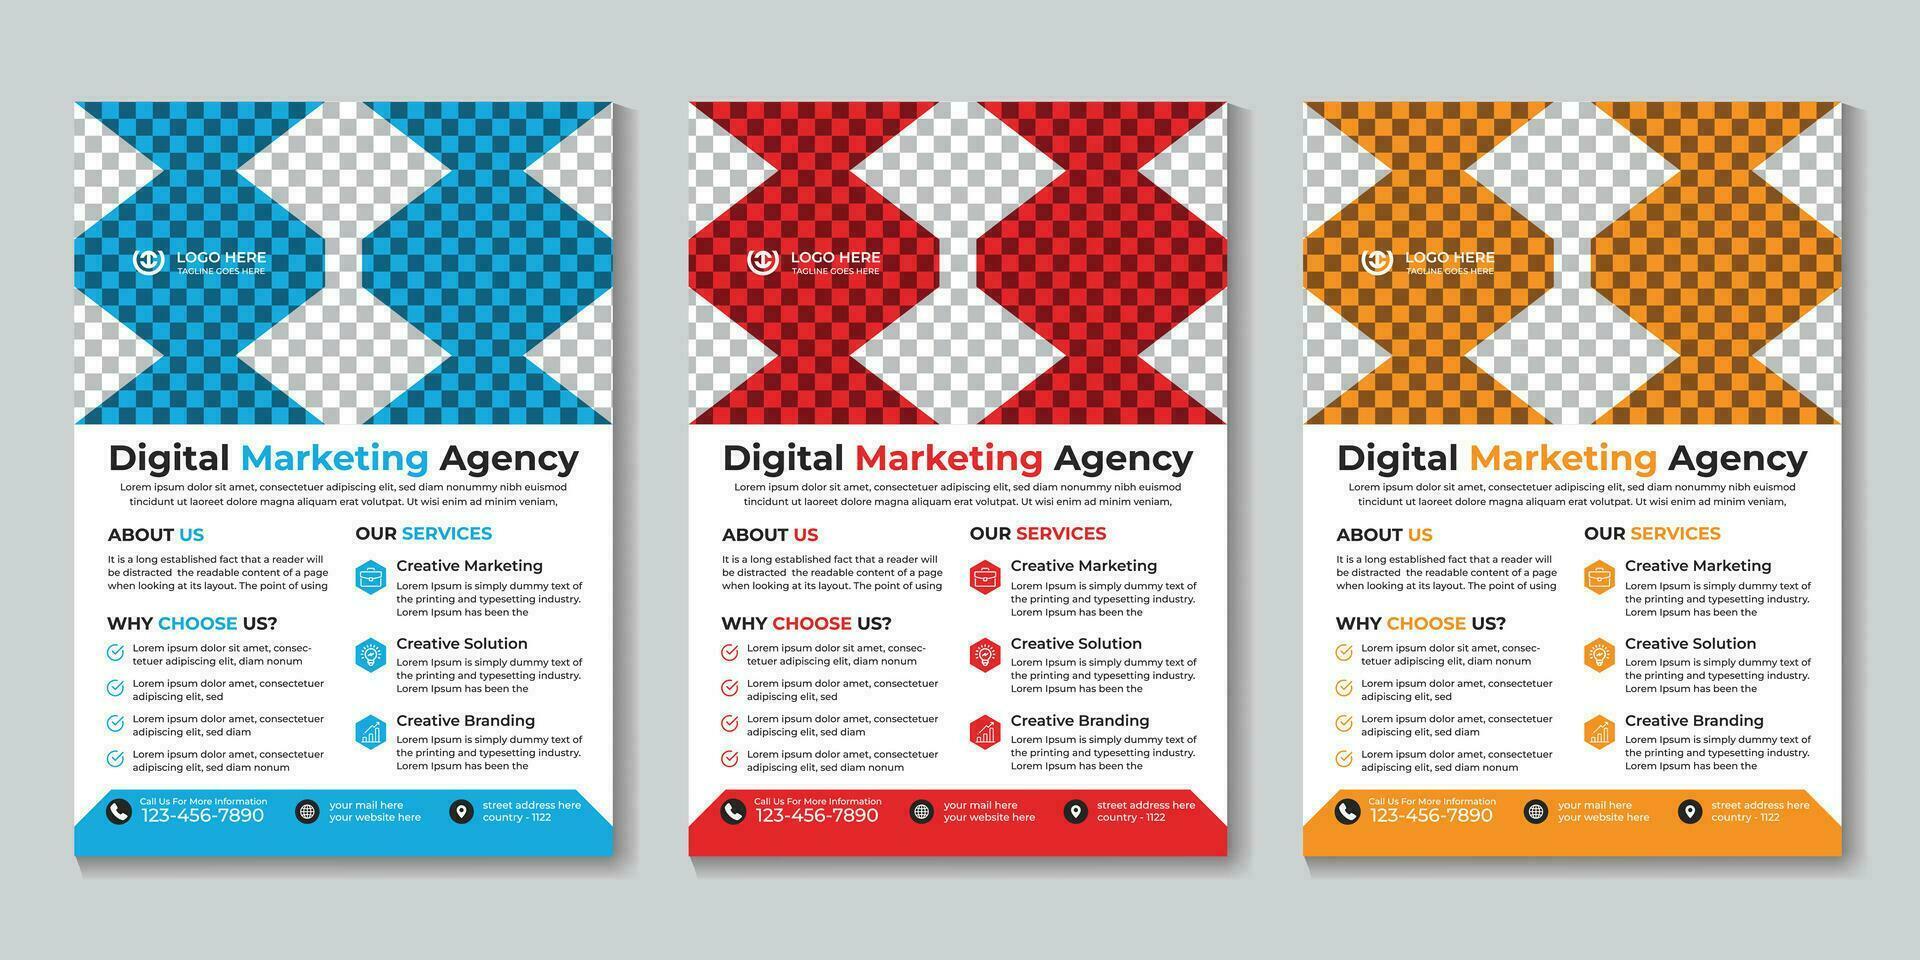 digital marketing agência folheto Projeto modelo livre vetor